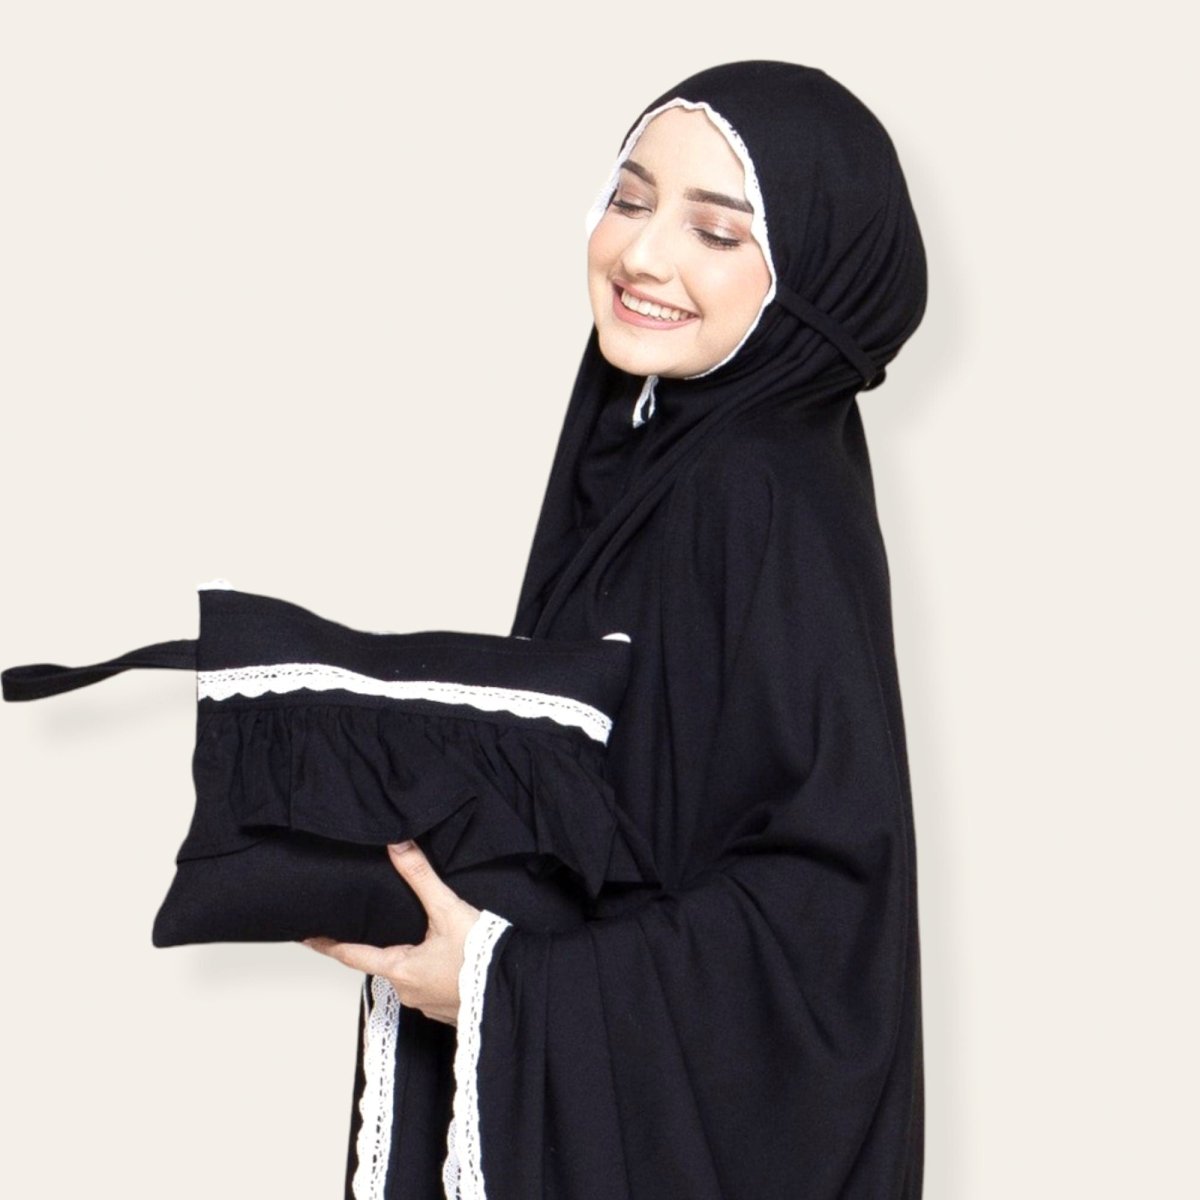 Black Salah Prayer Robe for Women Muslim